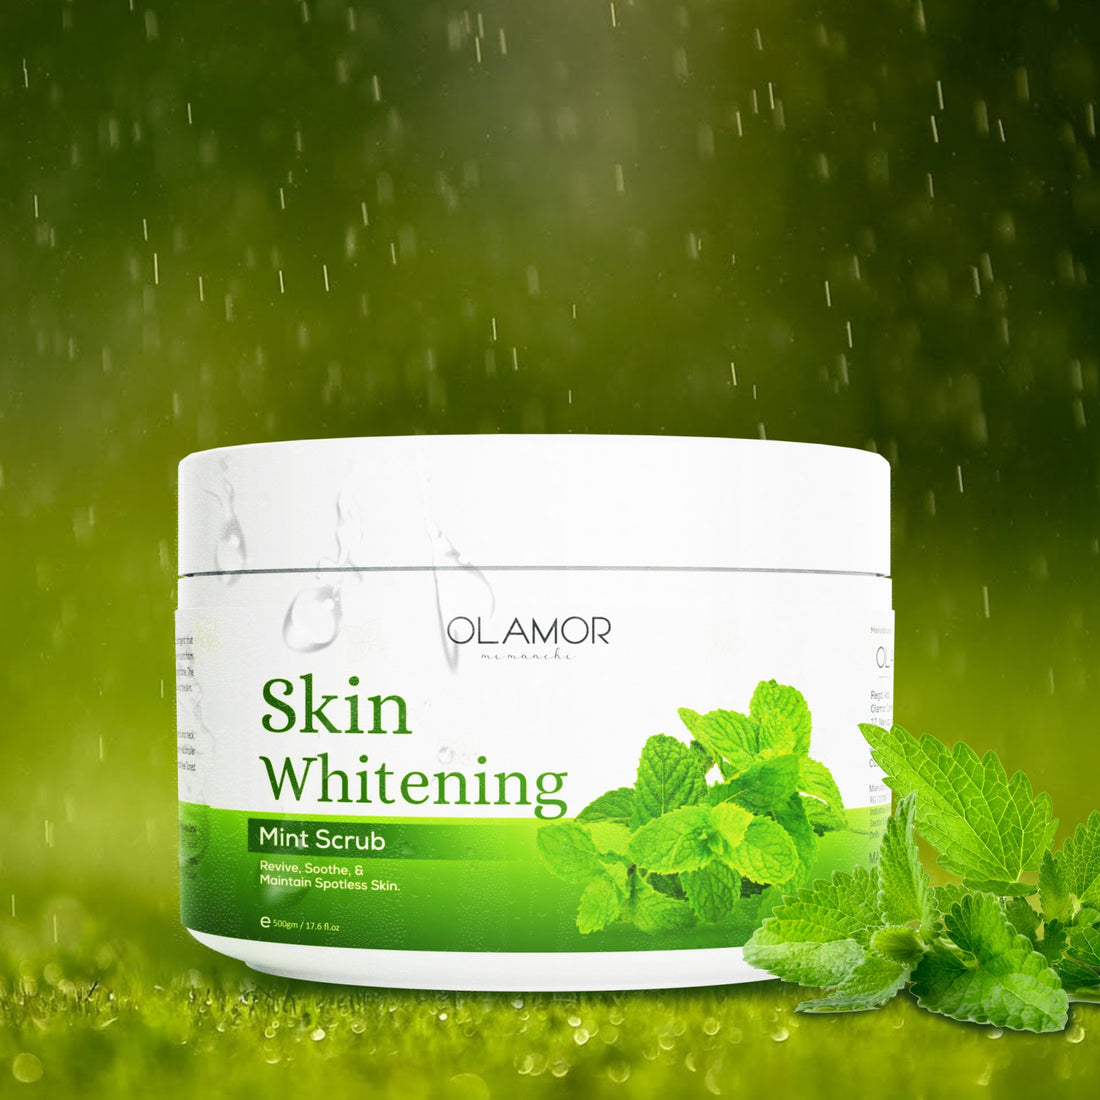 OLAMOR Skin Whitening Mint Scrub Lifestyle